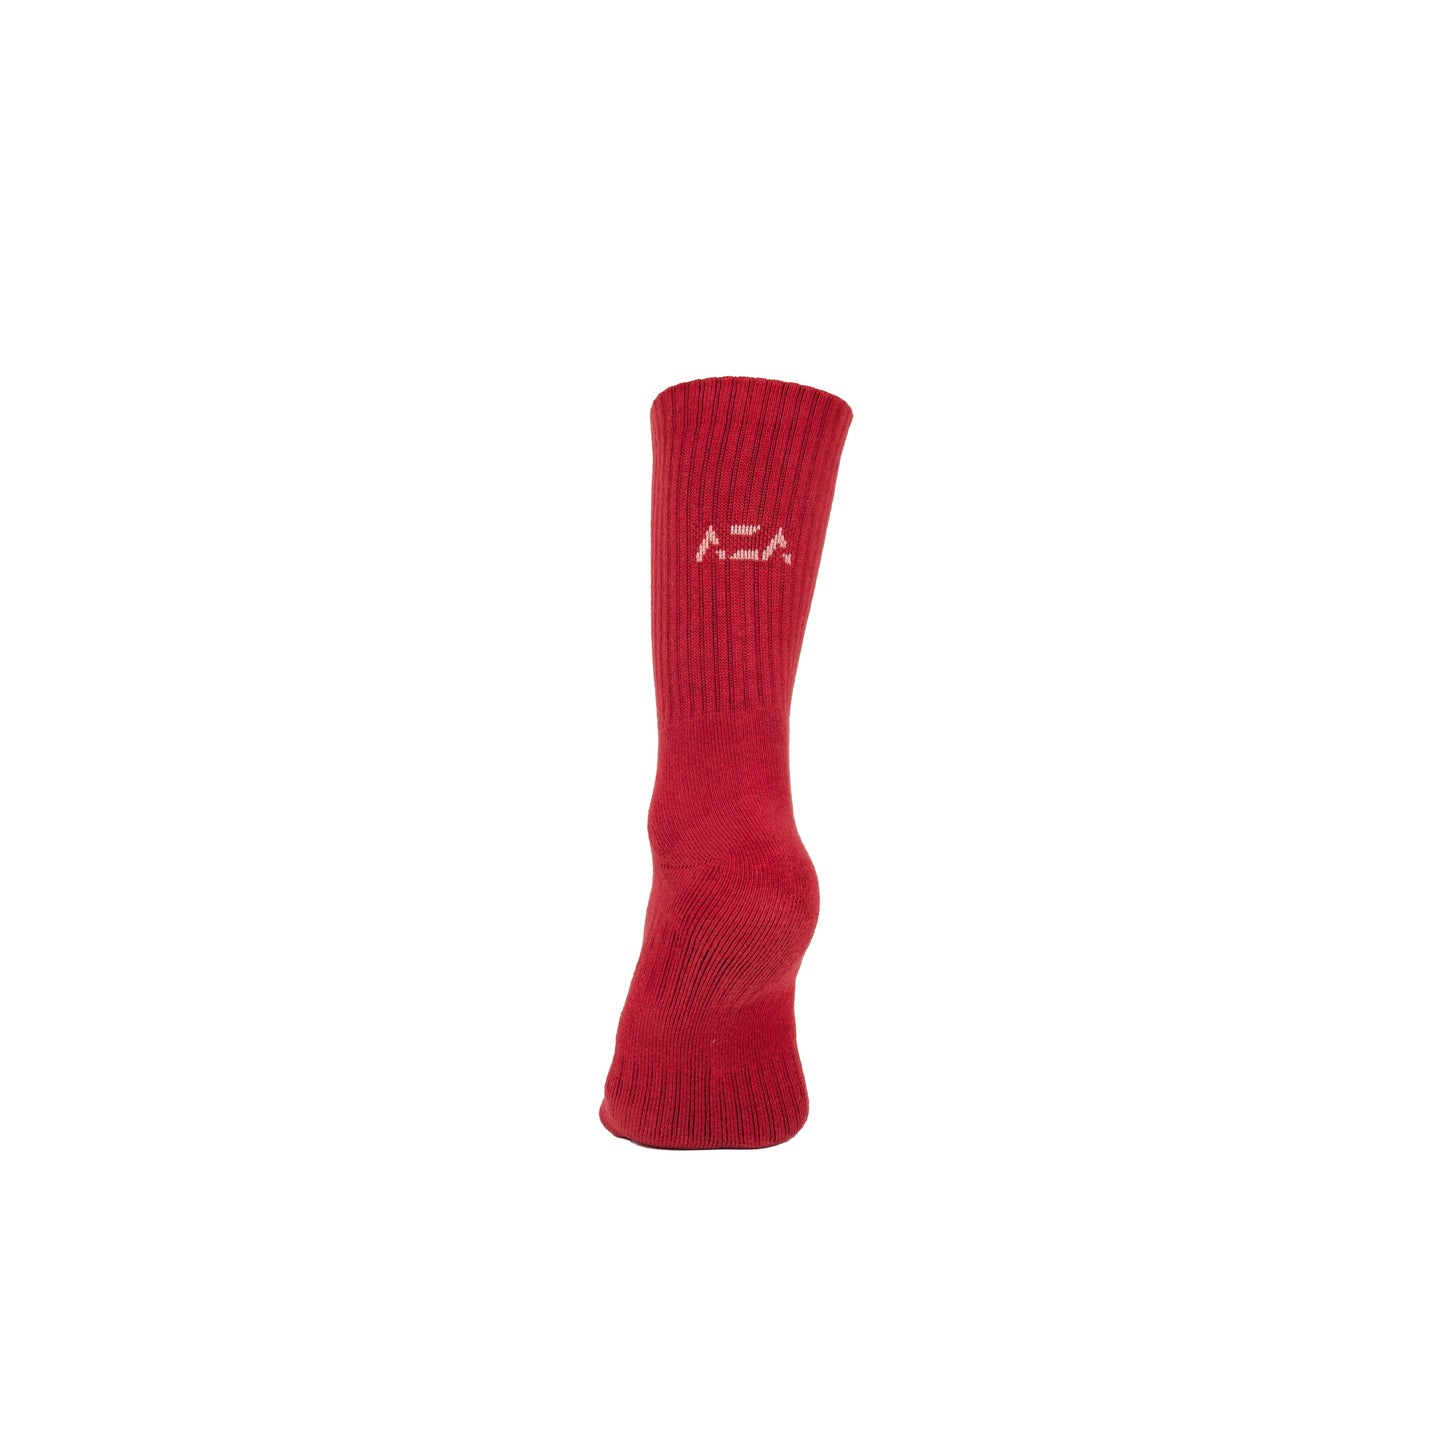 AZA Socks Colorful Edition - Maroon